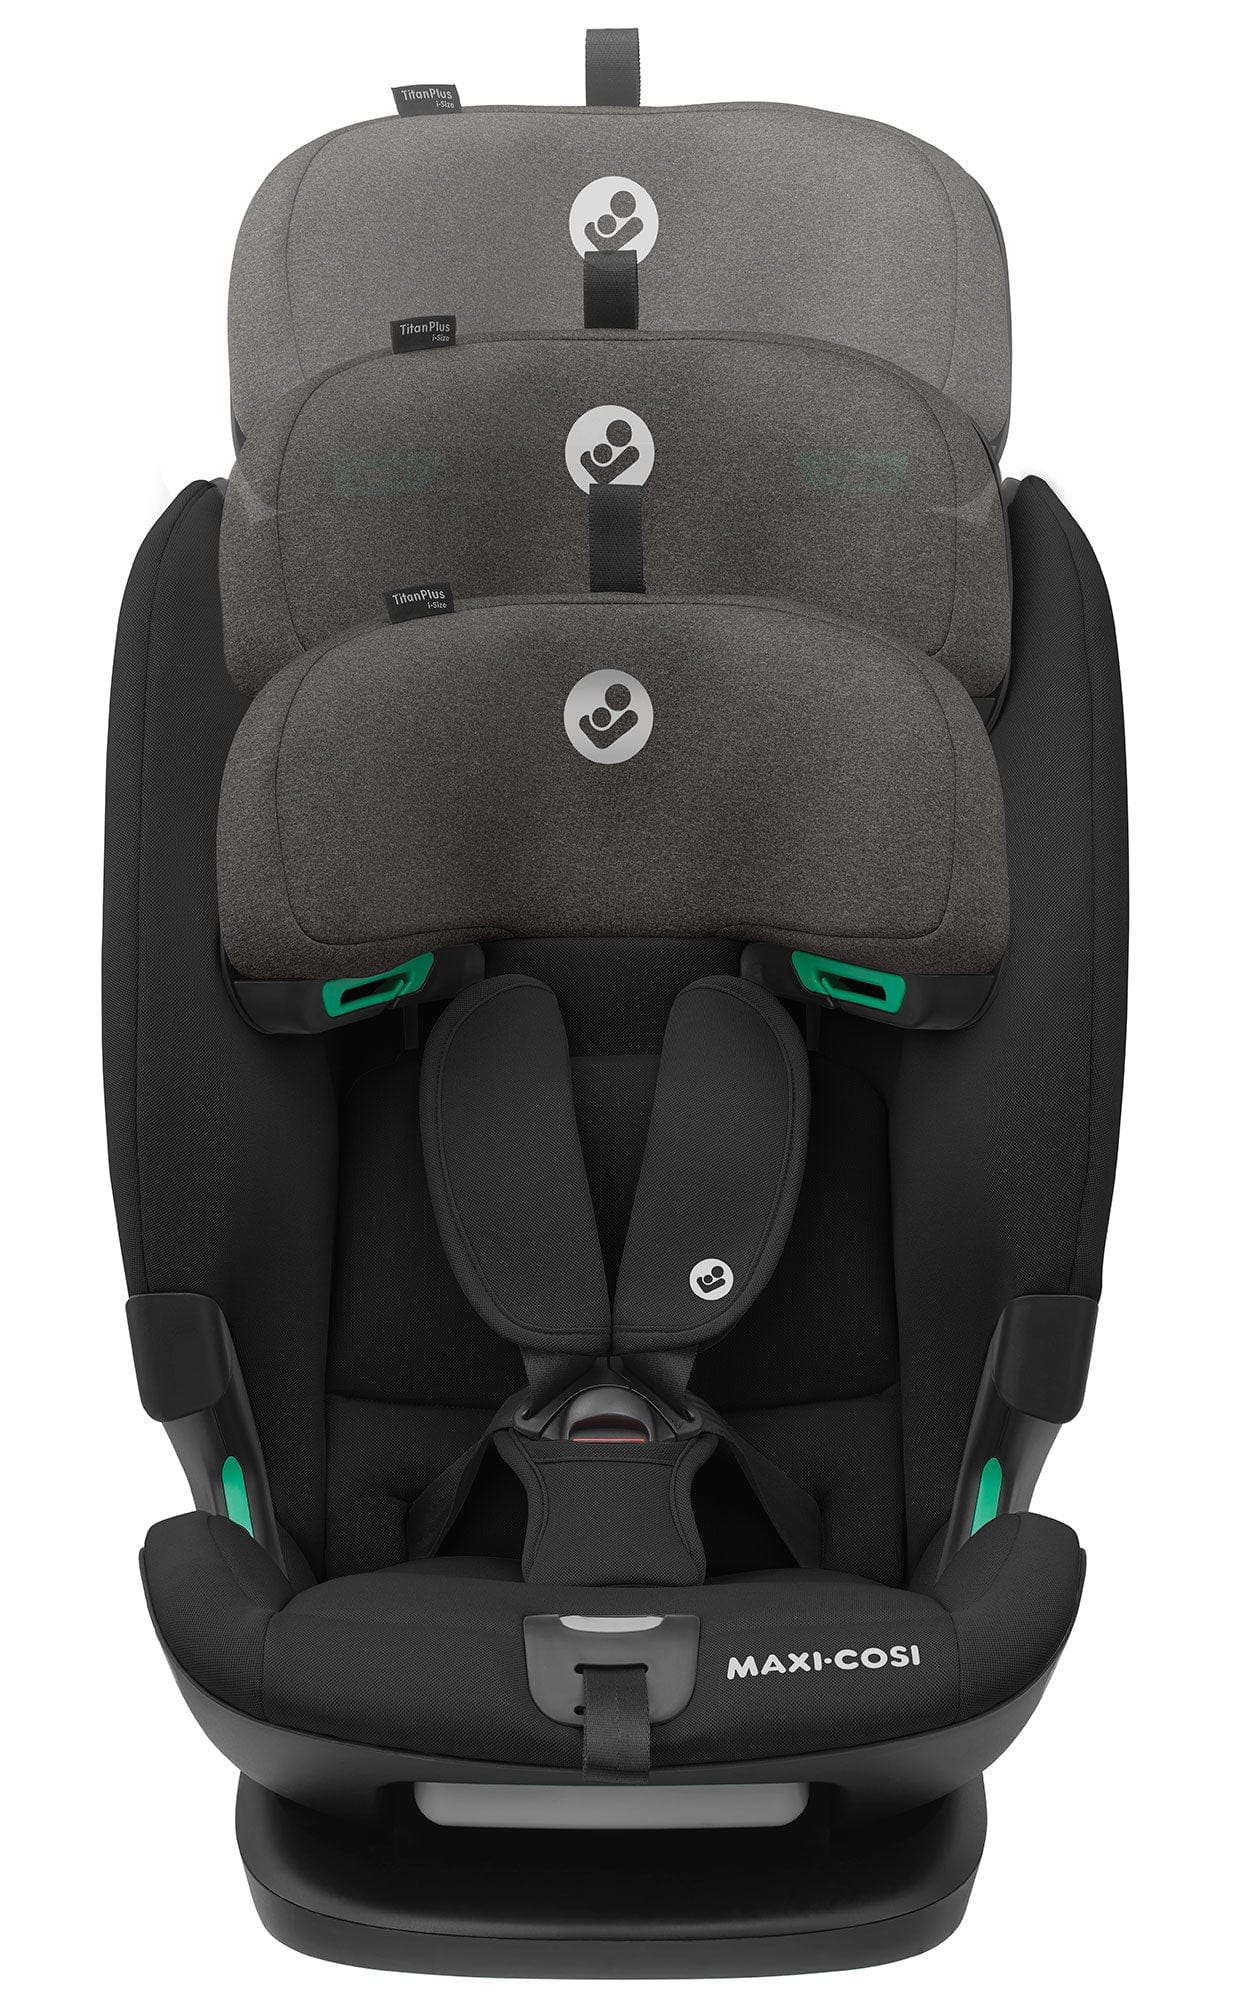 Maxi-Cosi Titan Plus i-Size Car Seat in Authentic Black Toddler Car Seats 8836671110 8712930183693